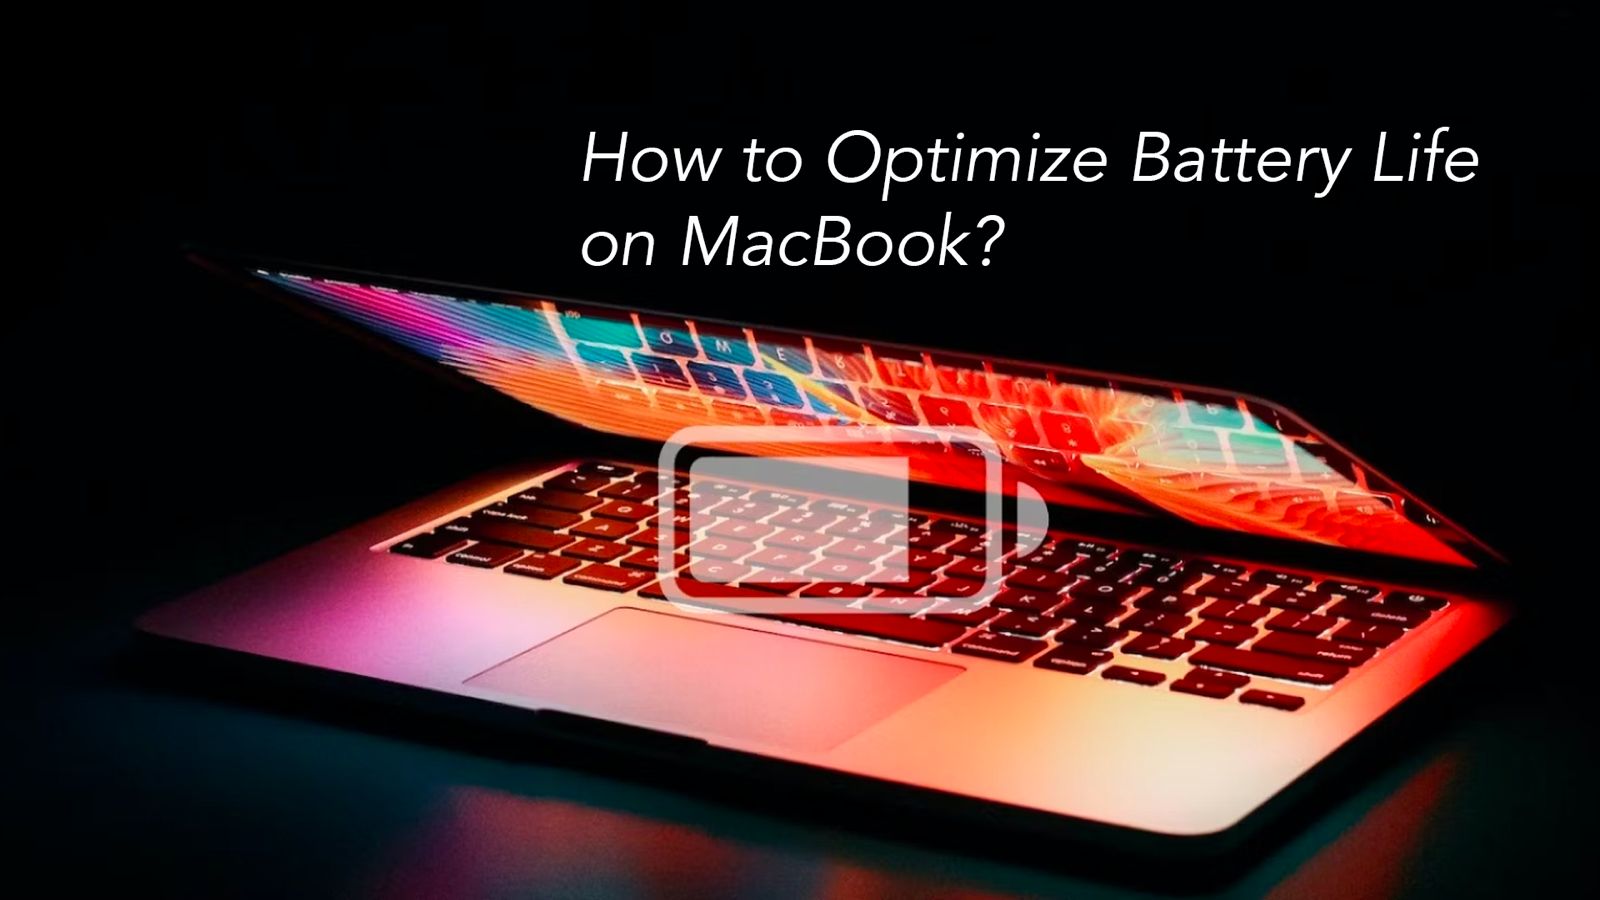 Optimize Battery Life on MacBook